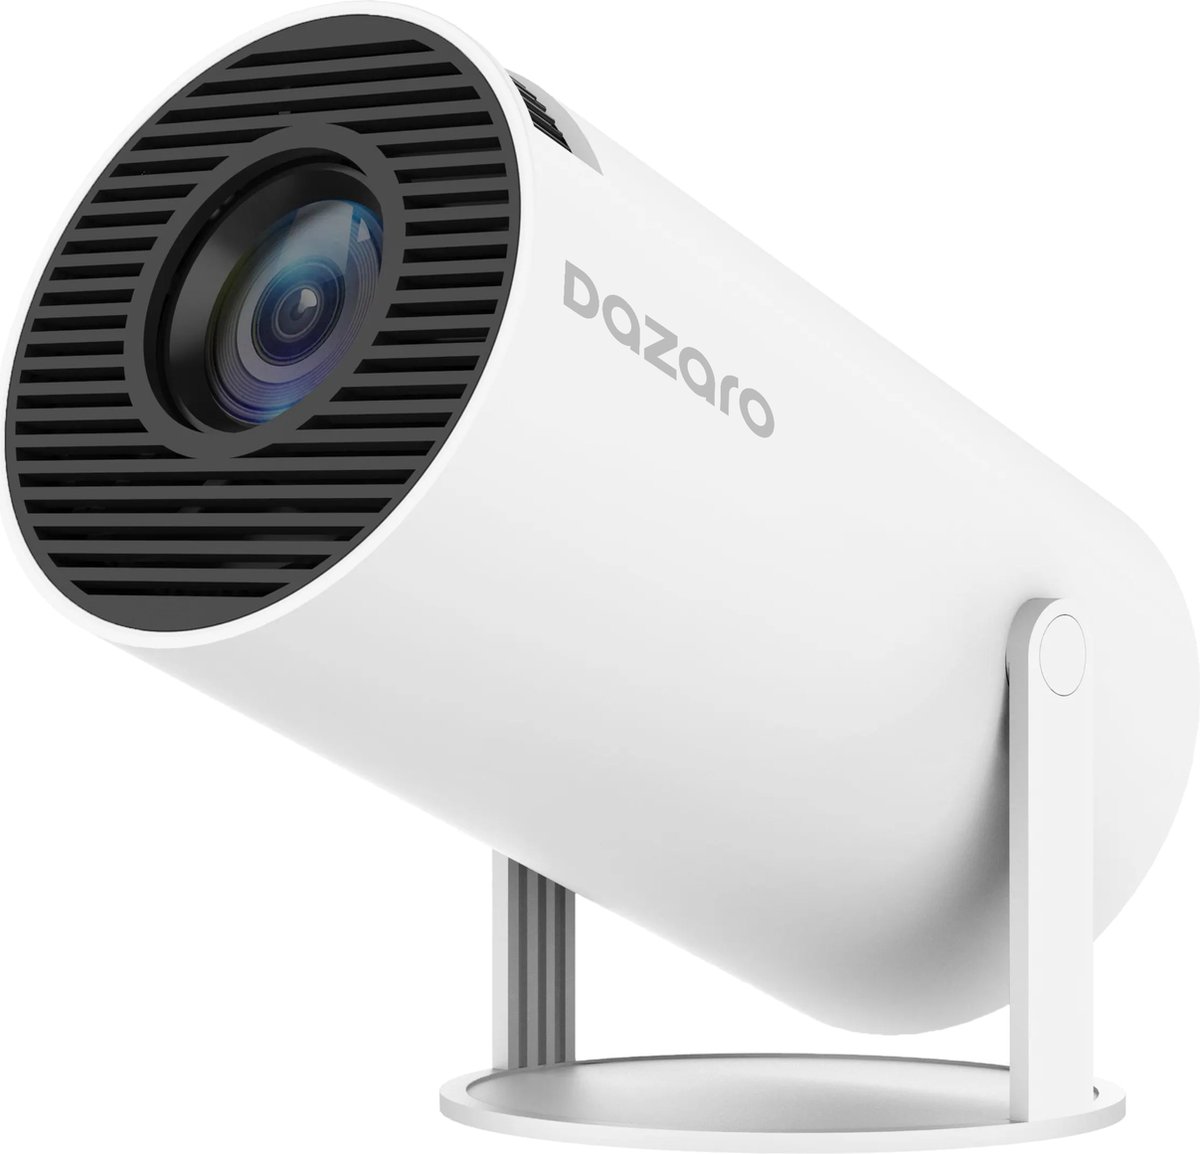 Dazaro Mini Projector - Mini Beamer - Projector - Beamer - Streamen Vanaf Je Telefoon Met WiFi - Dazaro